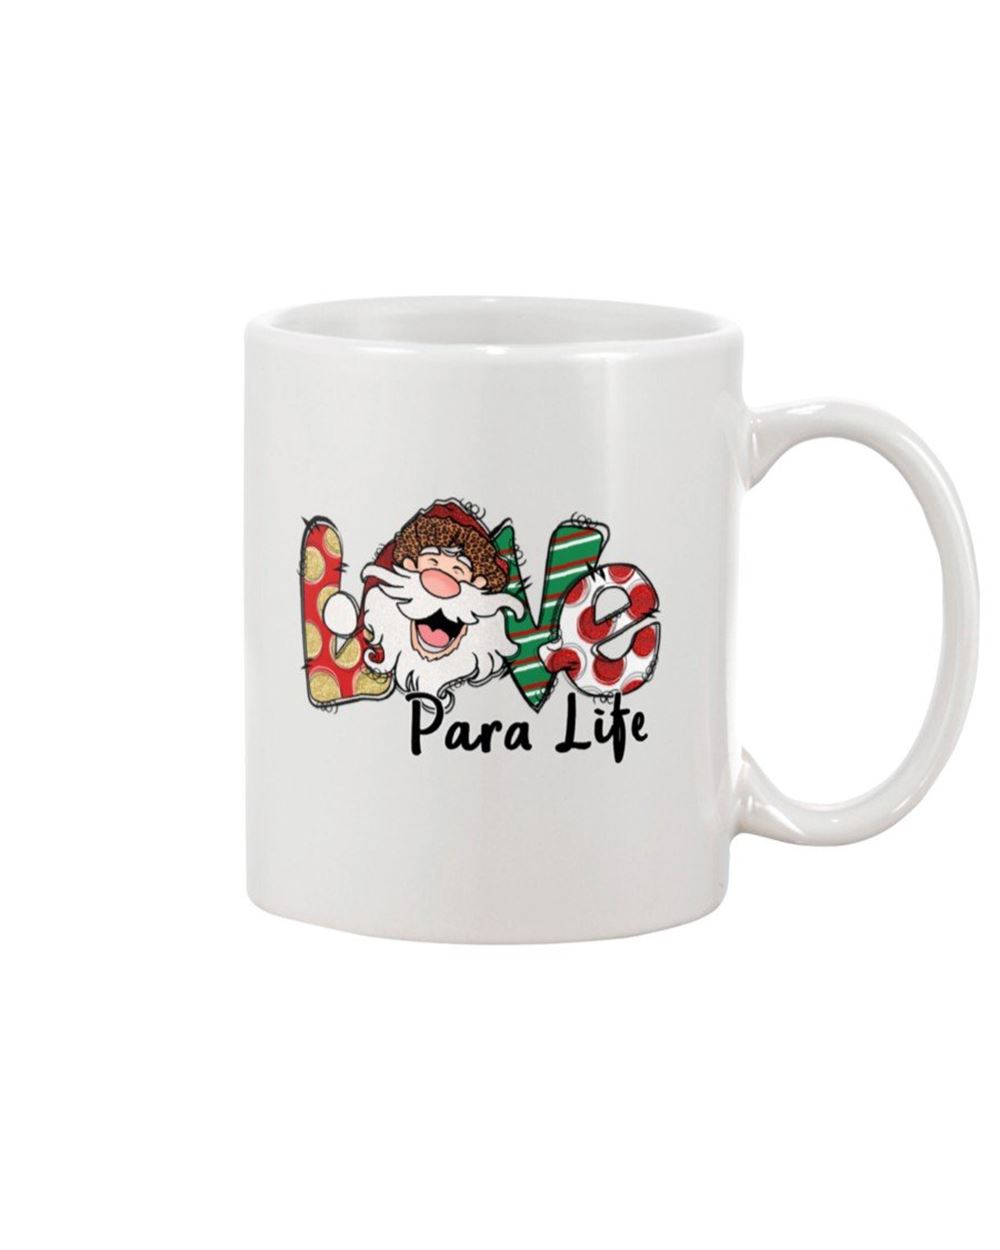 Paraprofessional Para Life White Mug